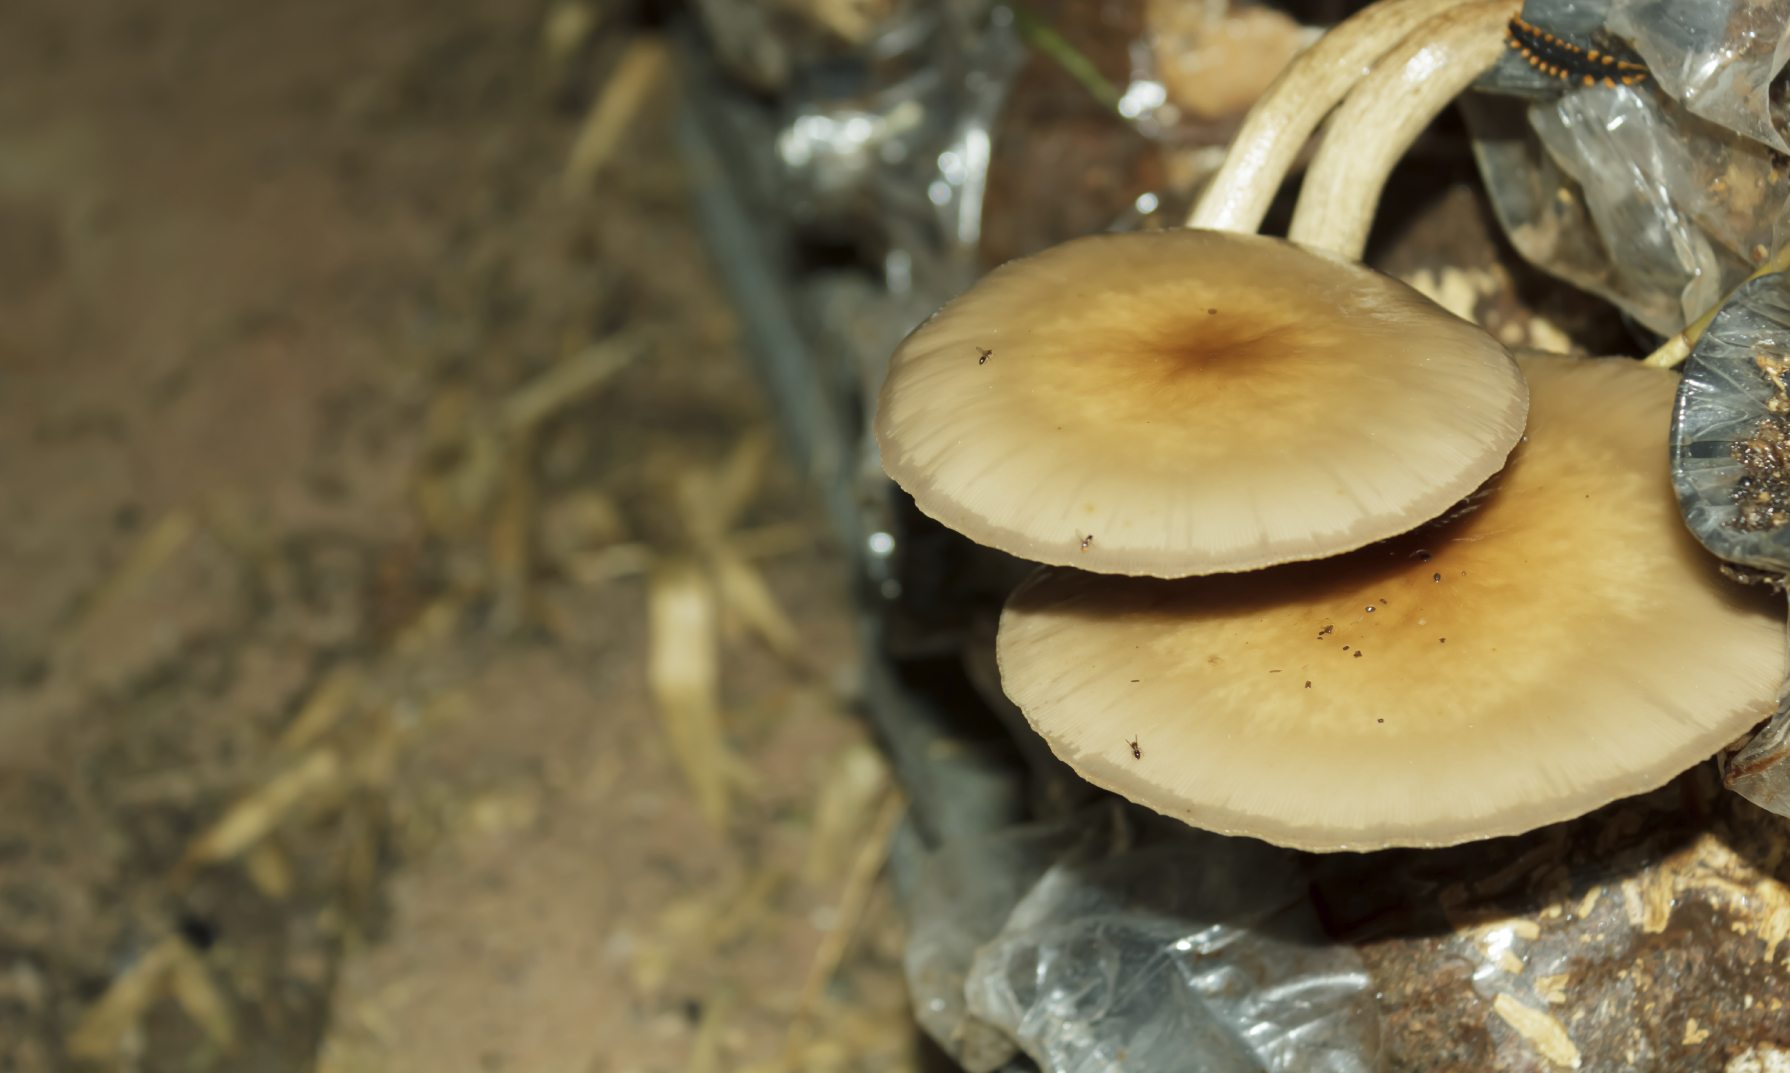 Growing Mushrooms: How To Grow Mushrooms At Home